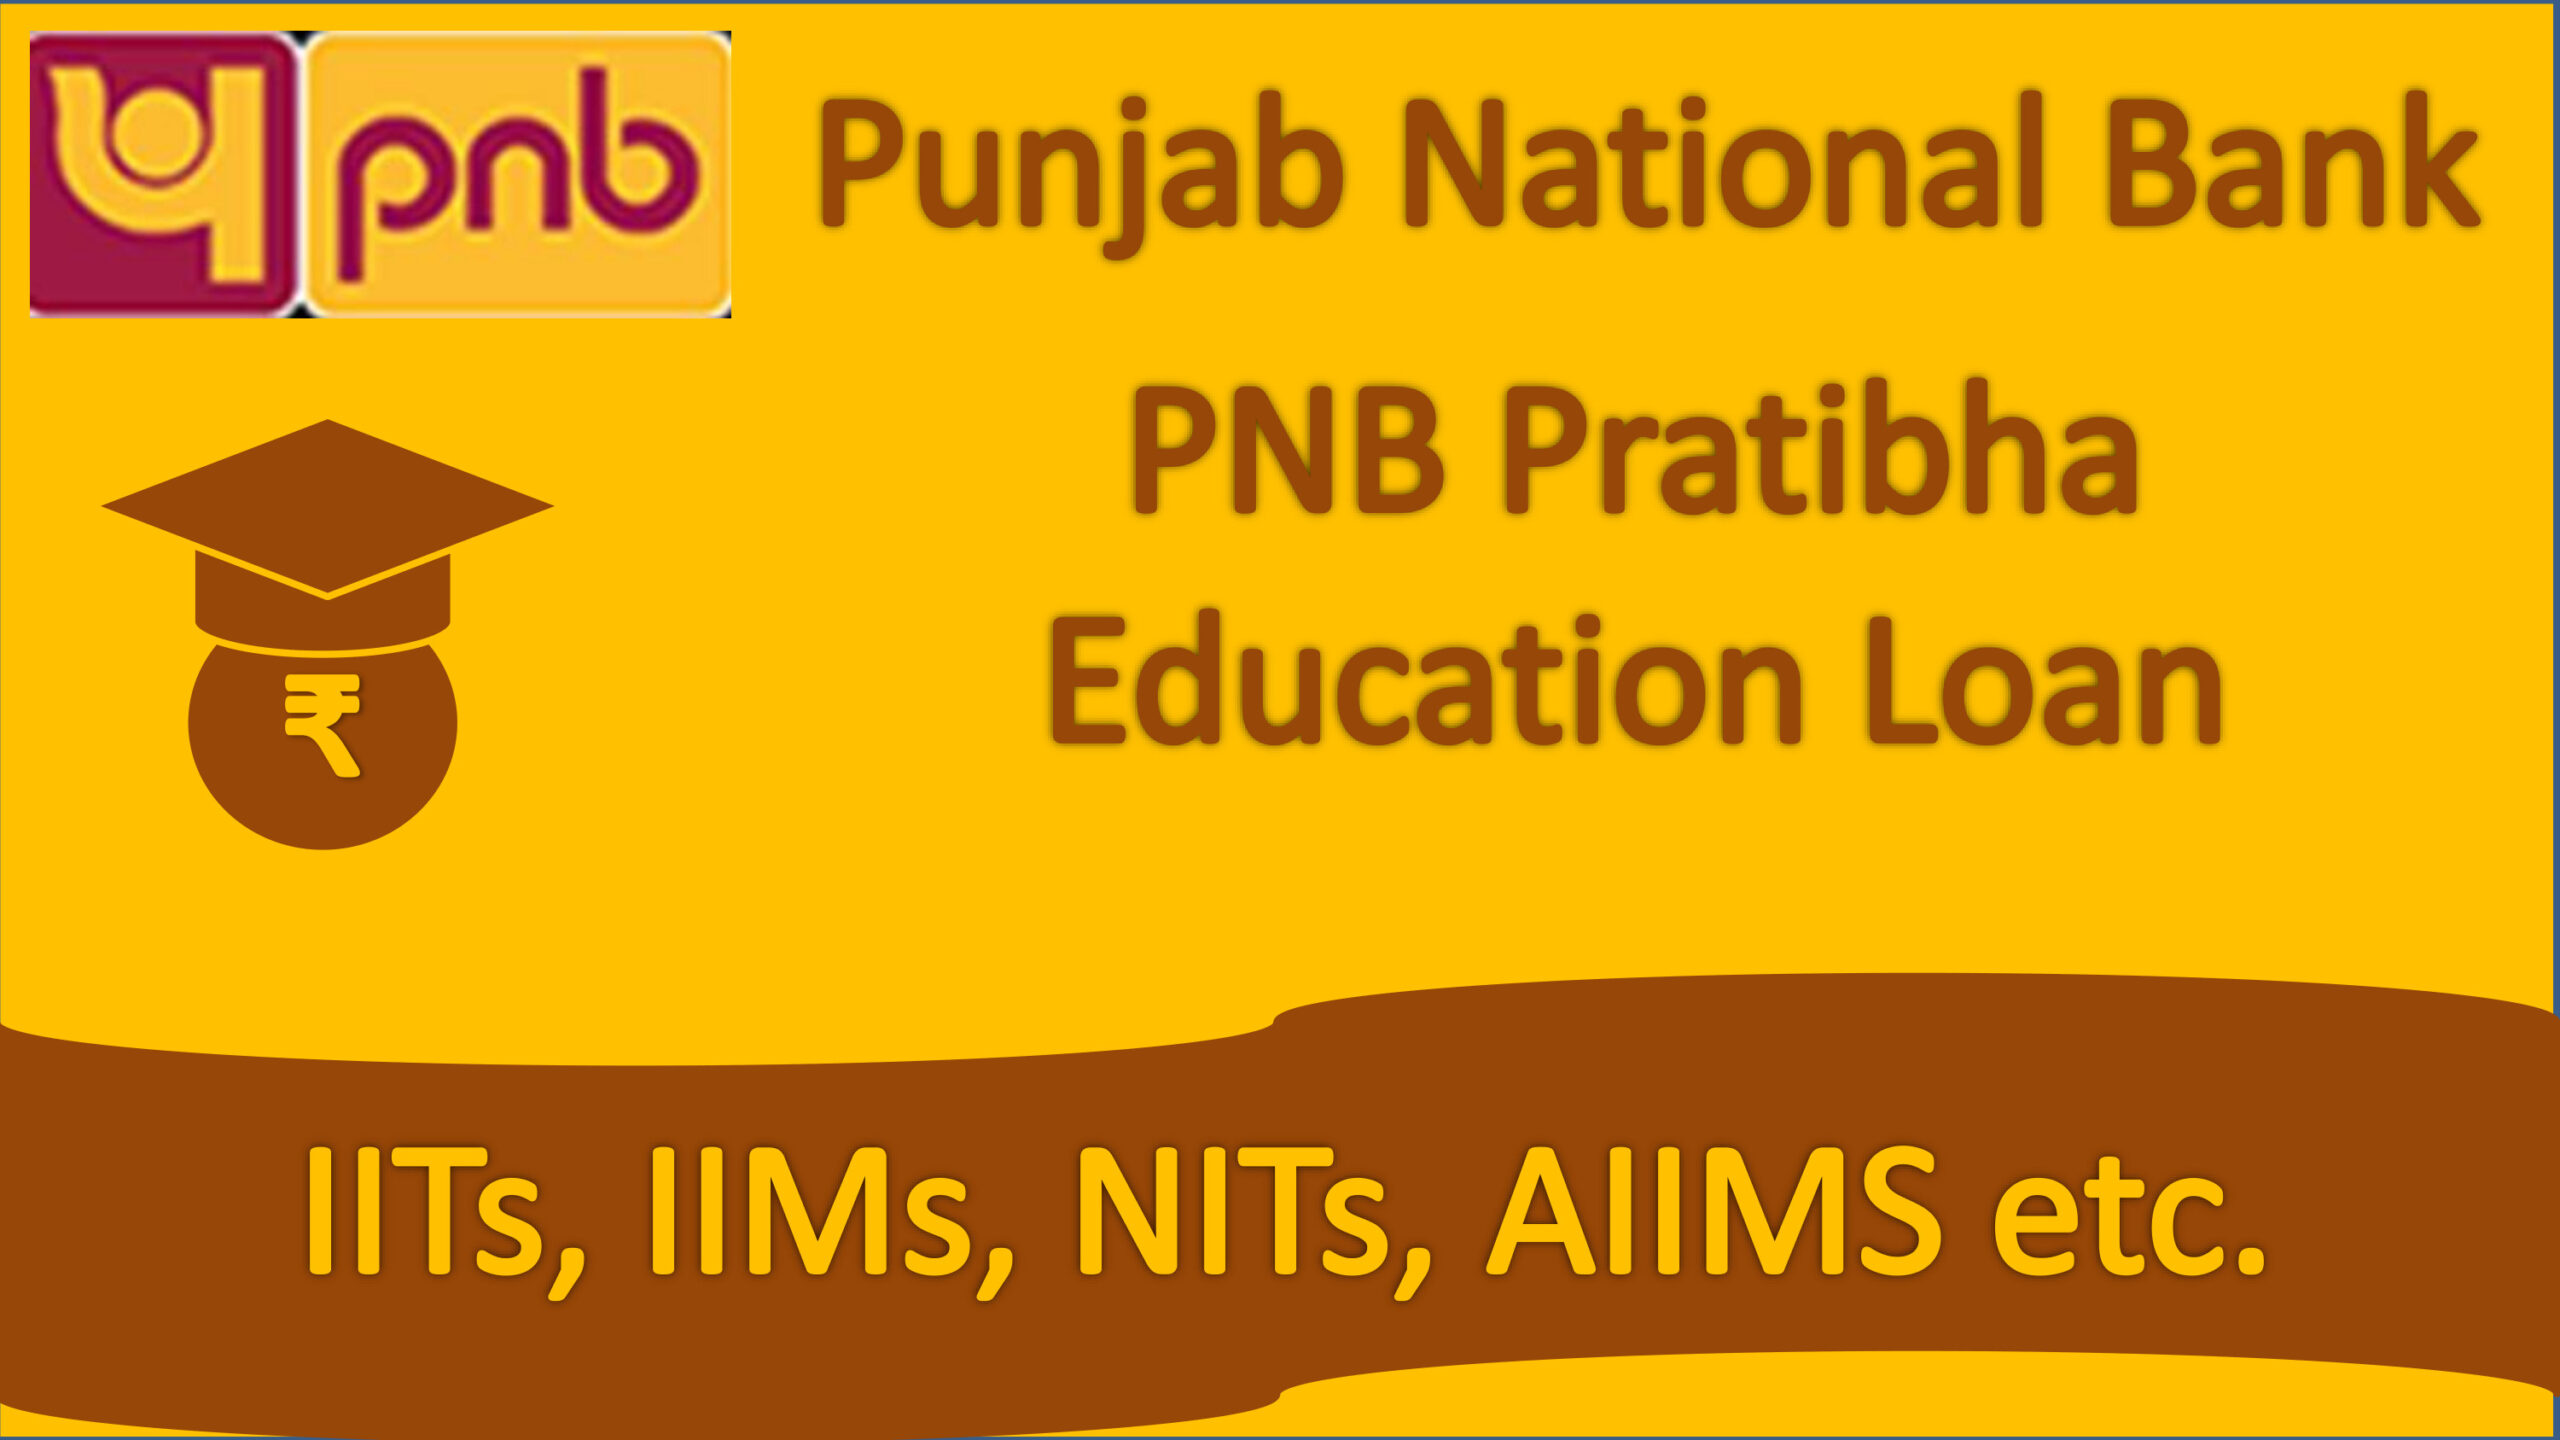 PNB Pratibha Education Loan